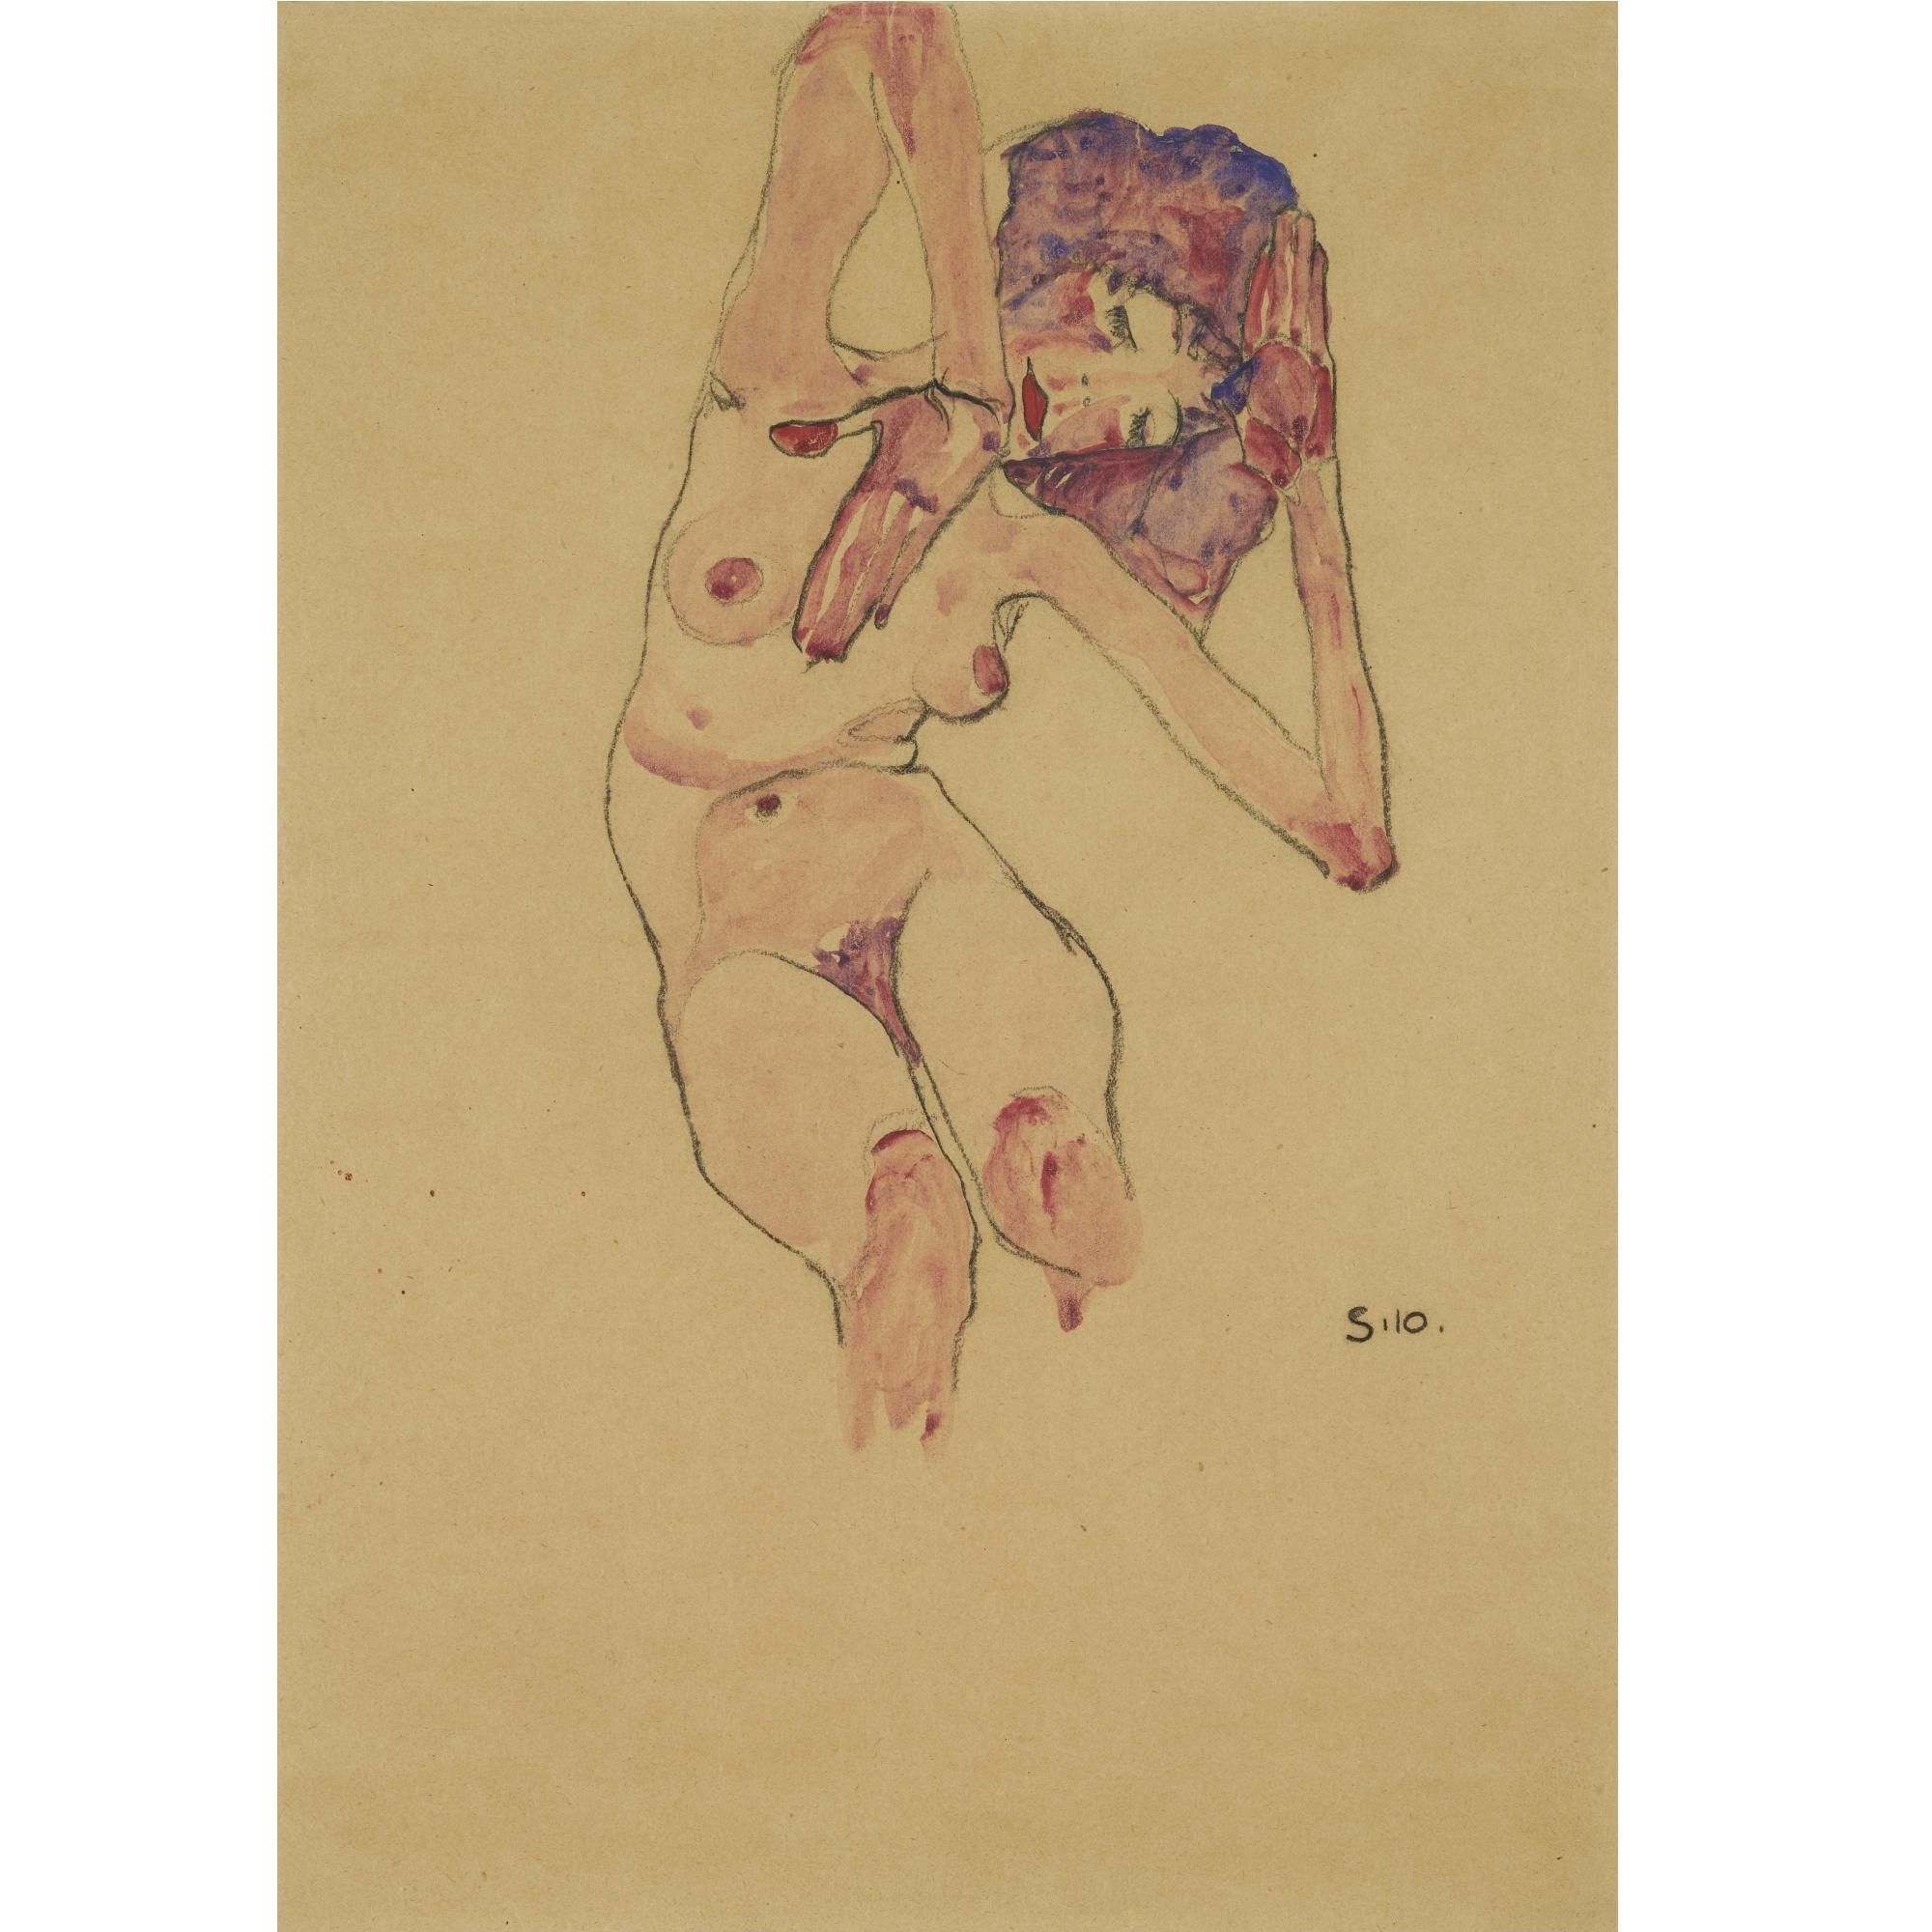 SITZENDER FRAUENAKT MIT GENEIGTEM KOPF UND ERHOBENEN ARMEN (SEATED FEMALE NUDE WITH TILTED HEAD AND RAISED ARMS) by Egon Schiele, FullFormat:,year,1910